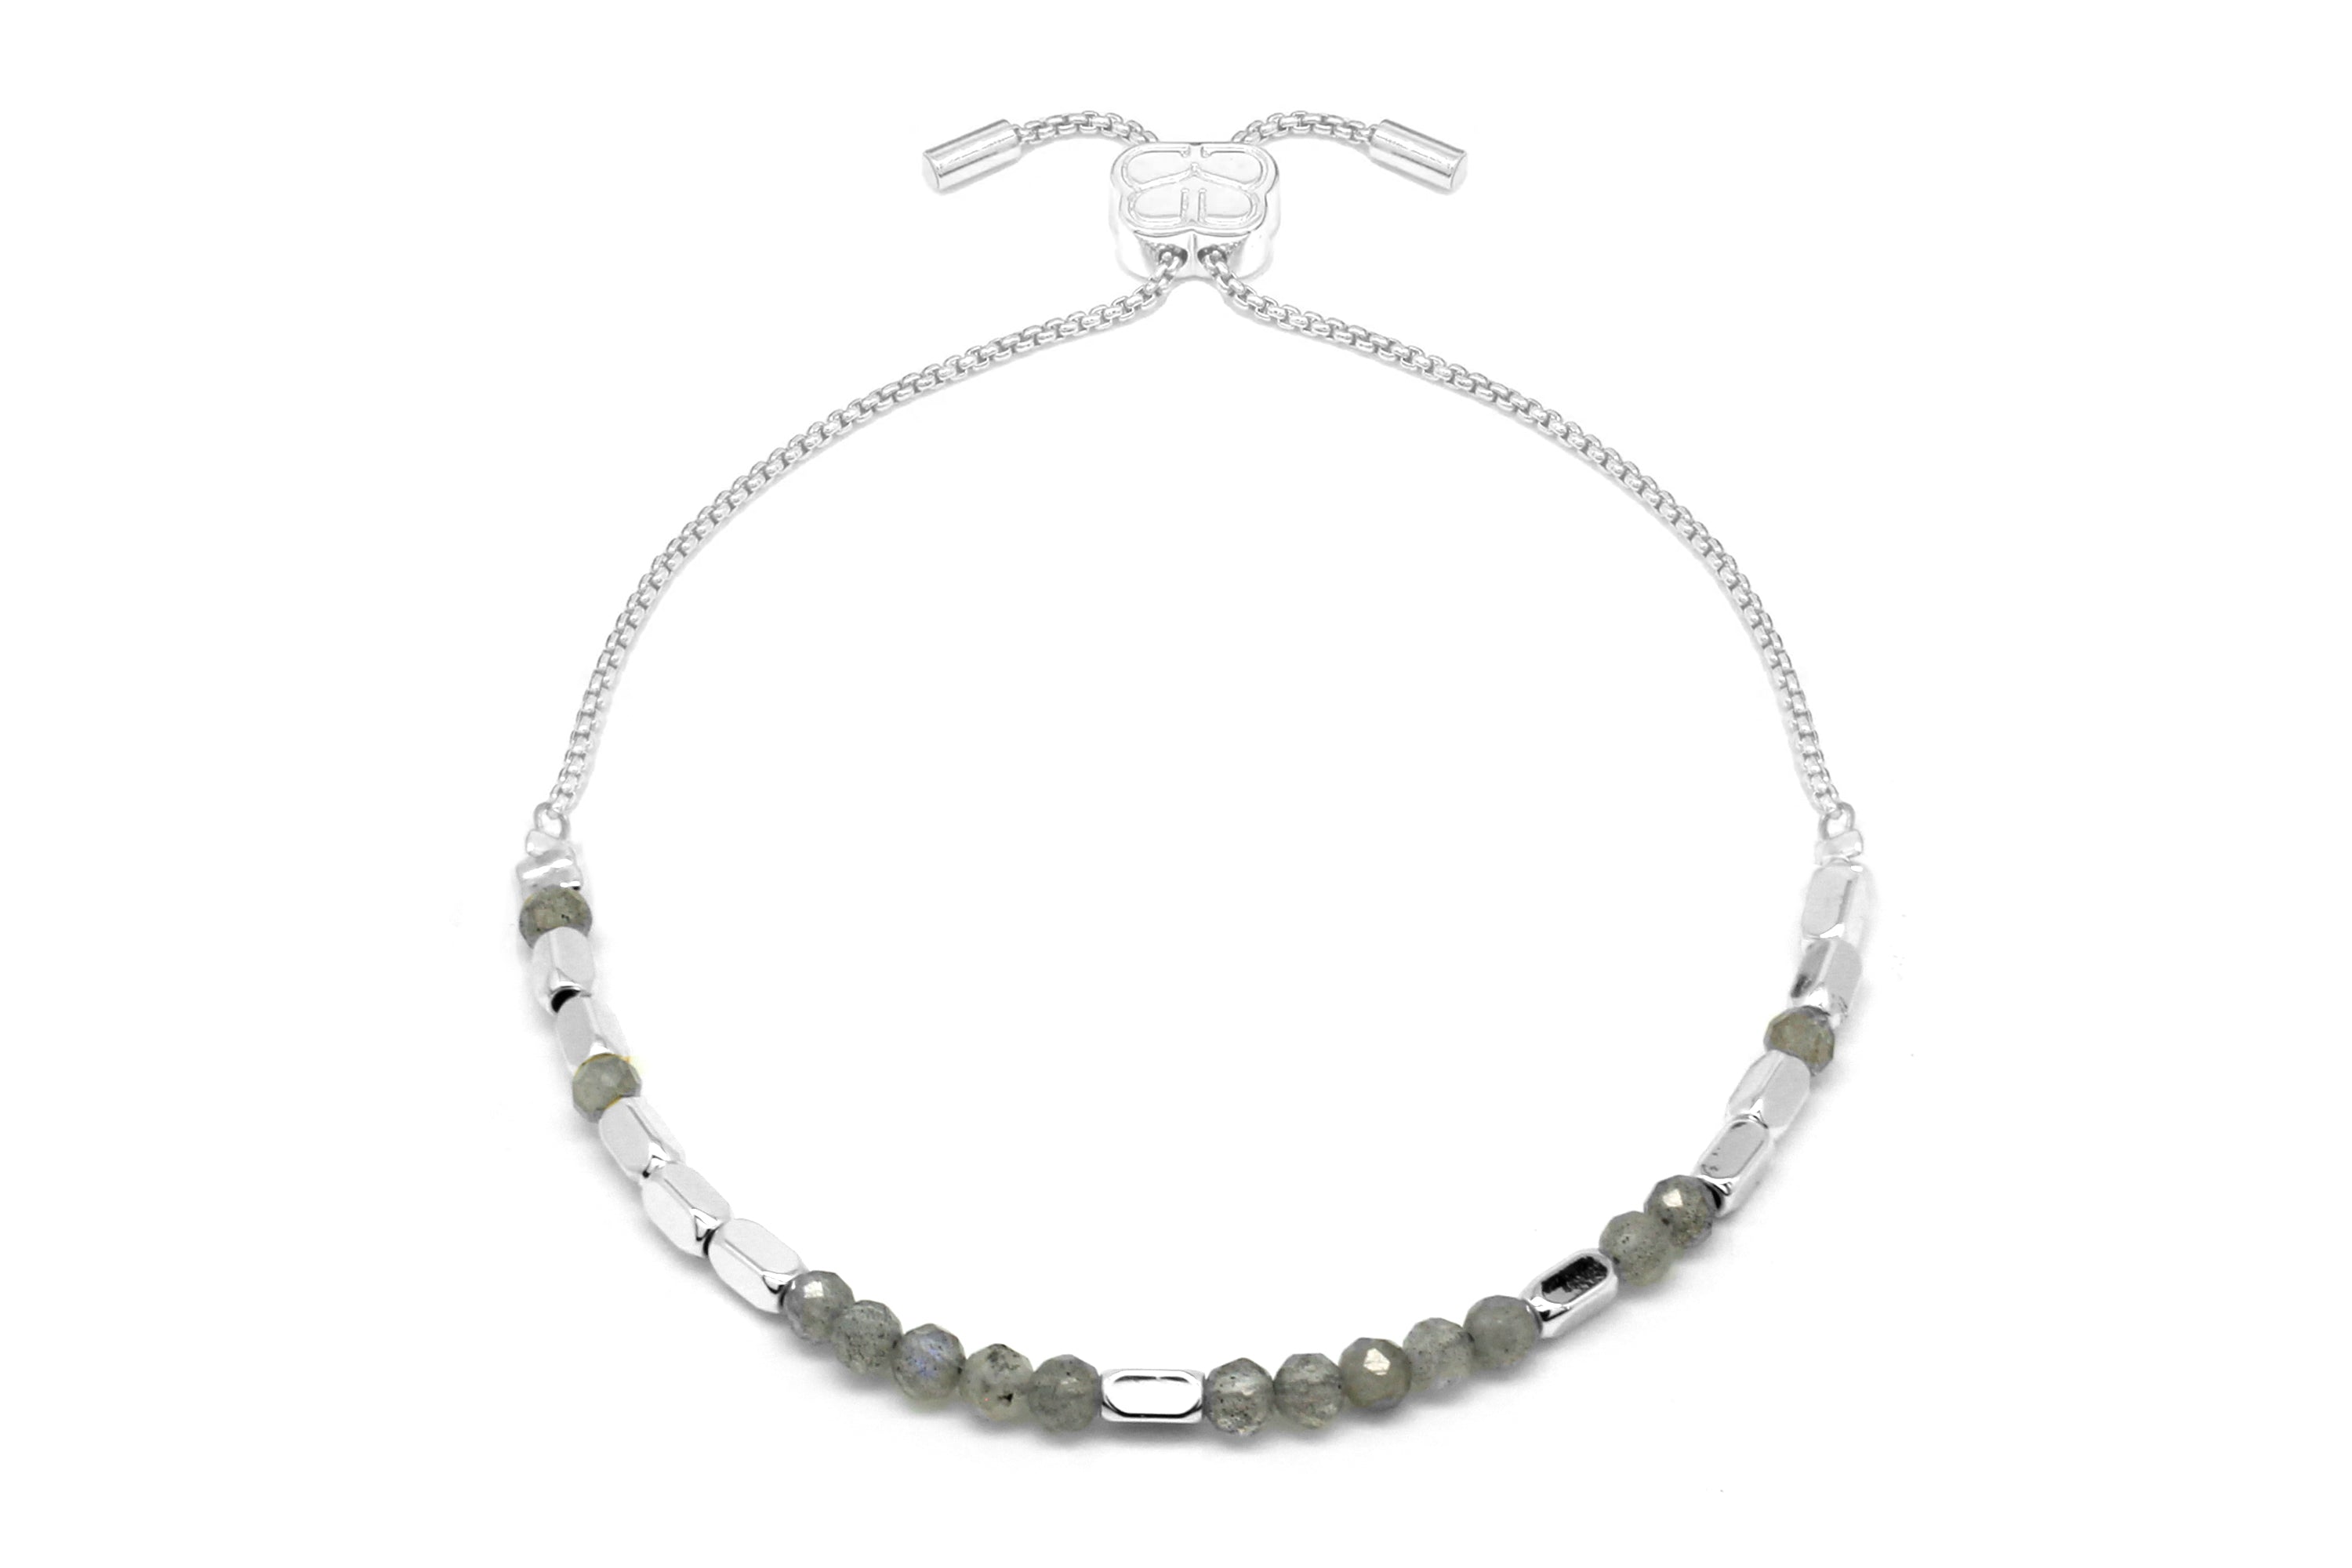 Morse Code Positivity Gemstone Silver Bracelet - Boho Betty